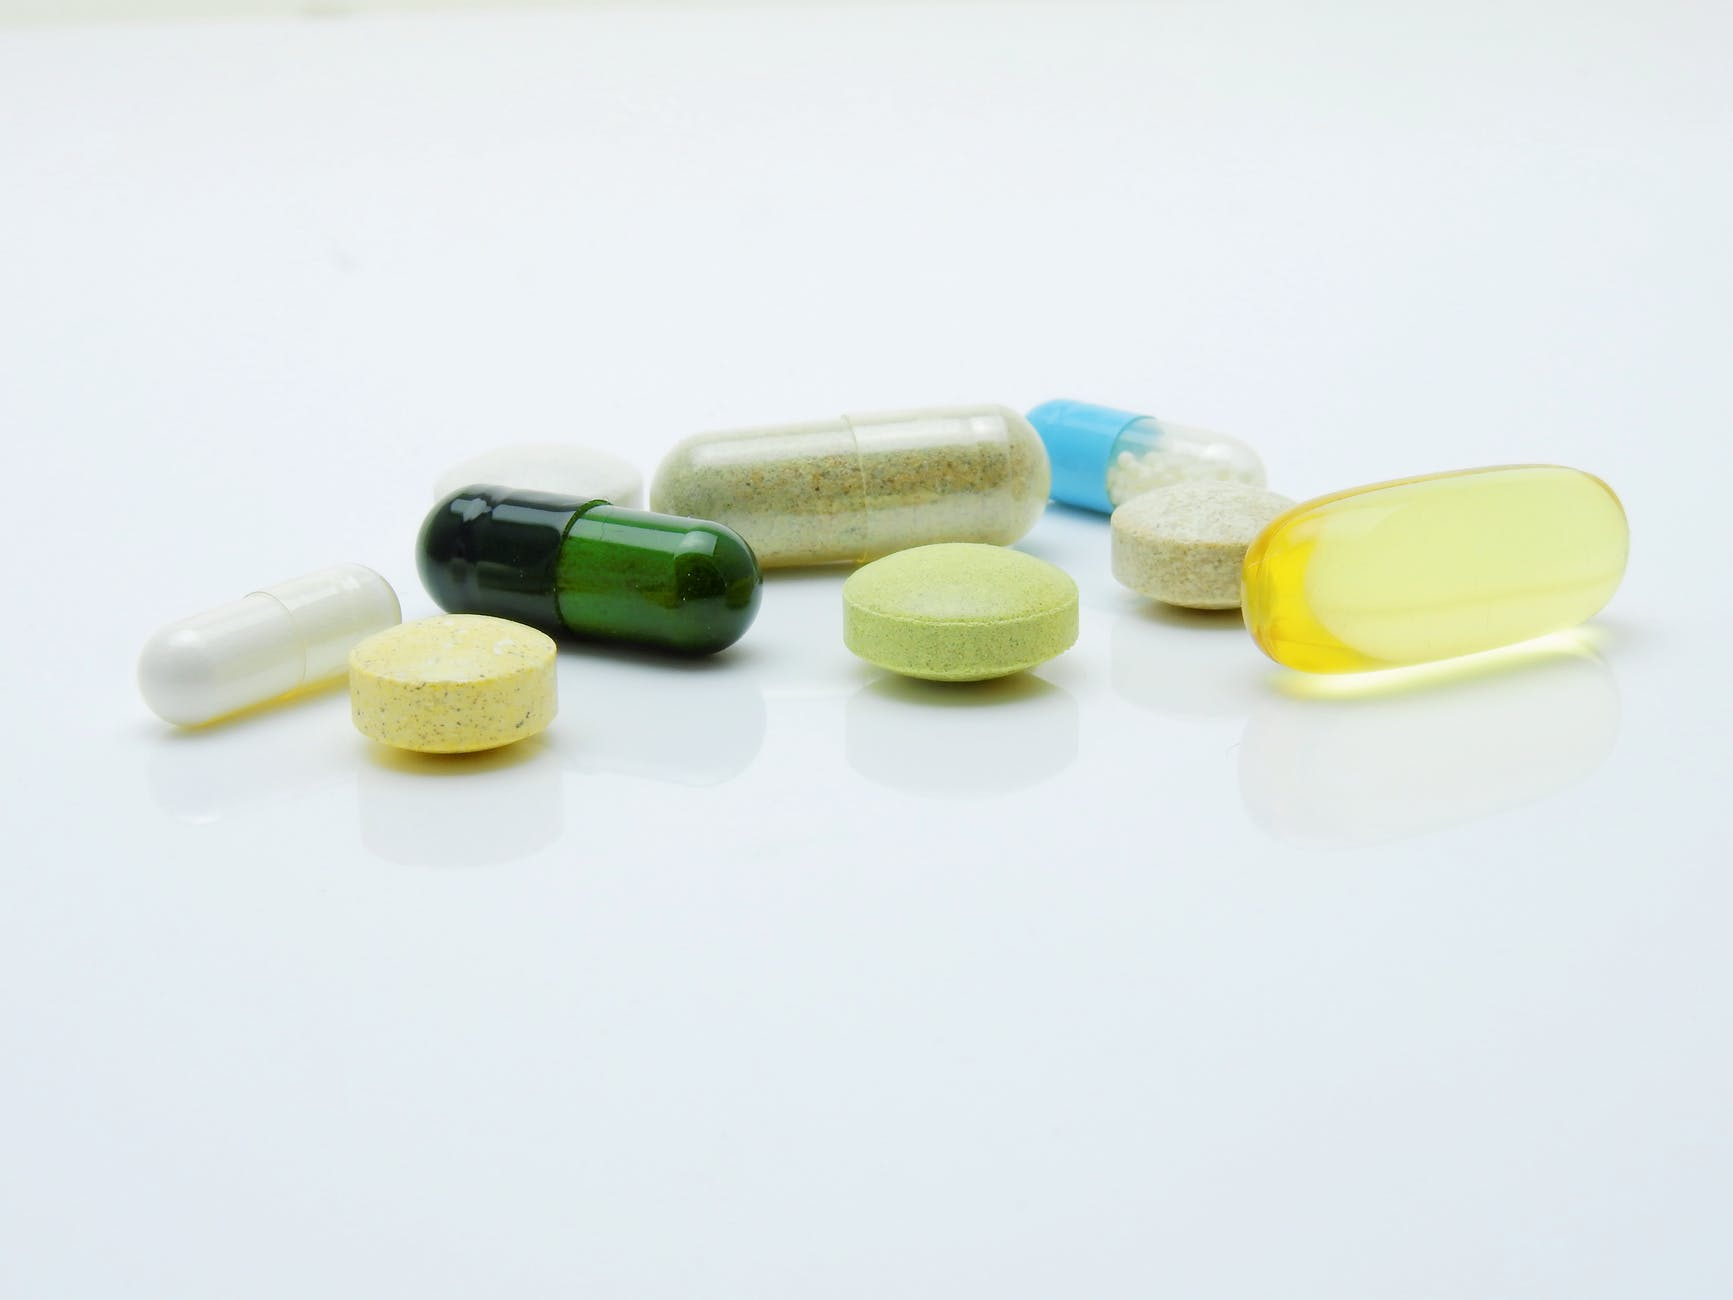 prescription medicines on a table